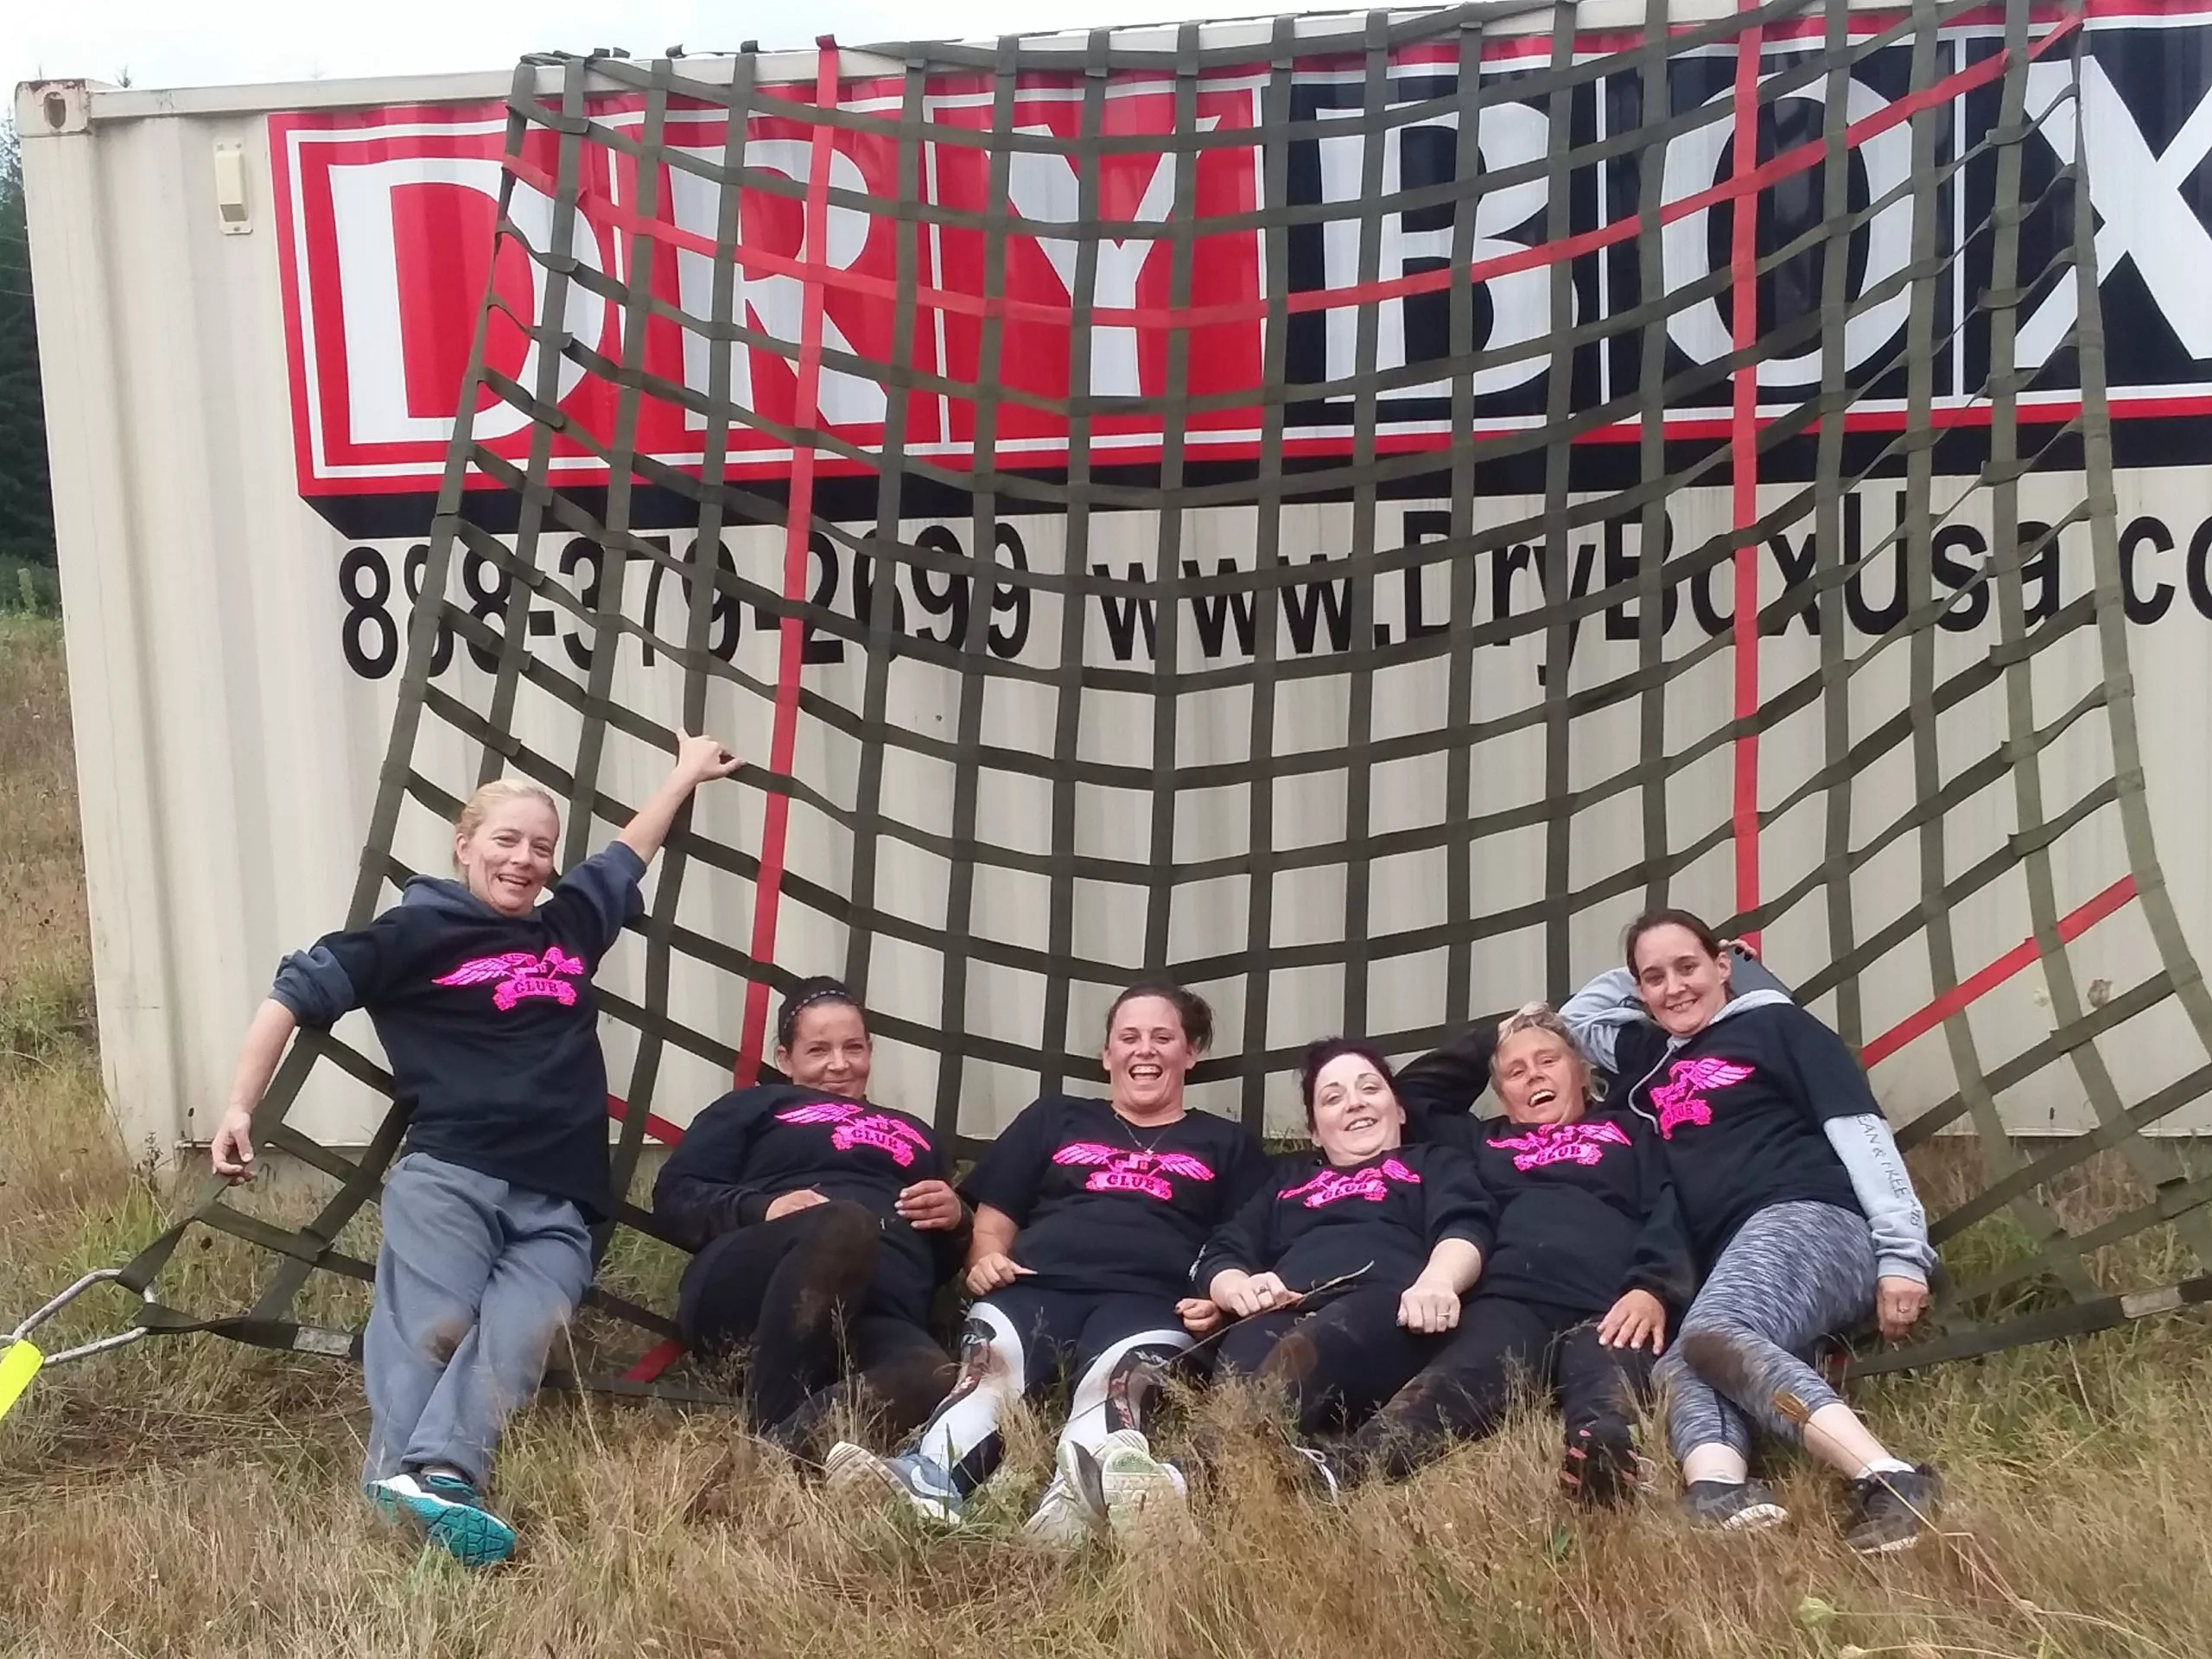 drybox team in front of net